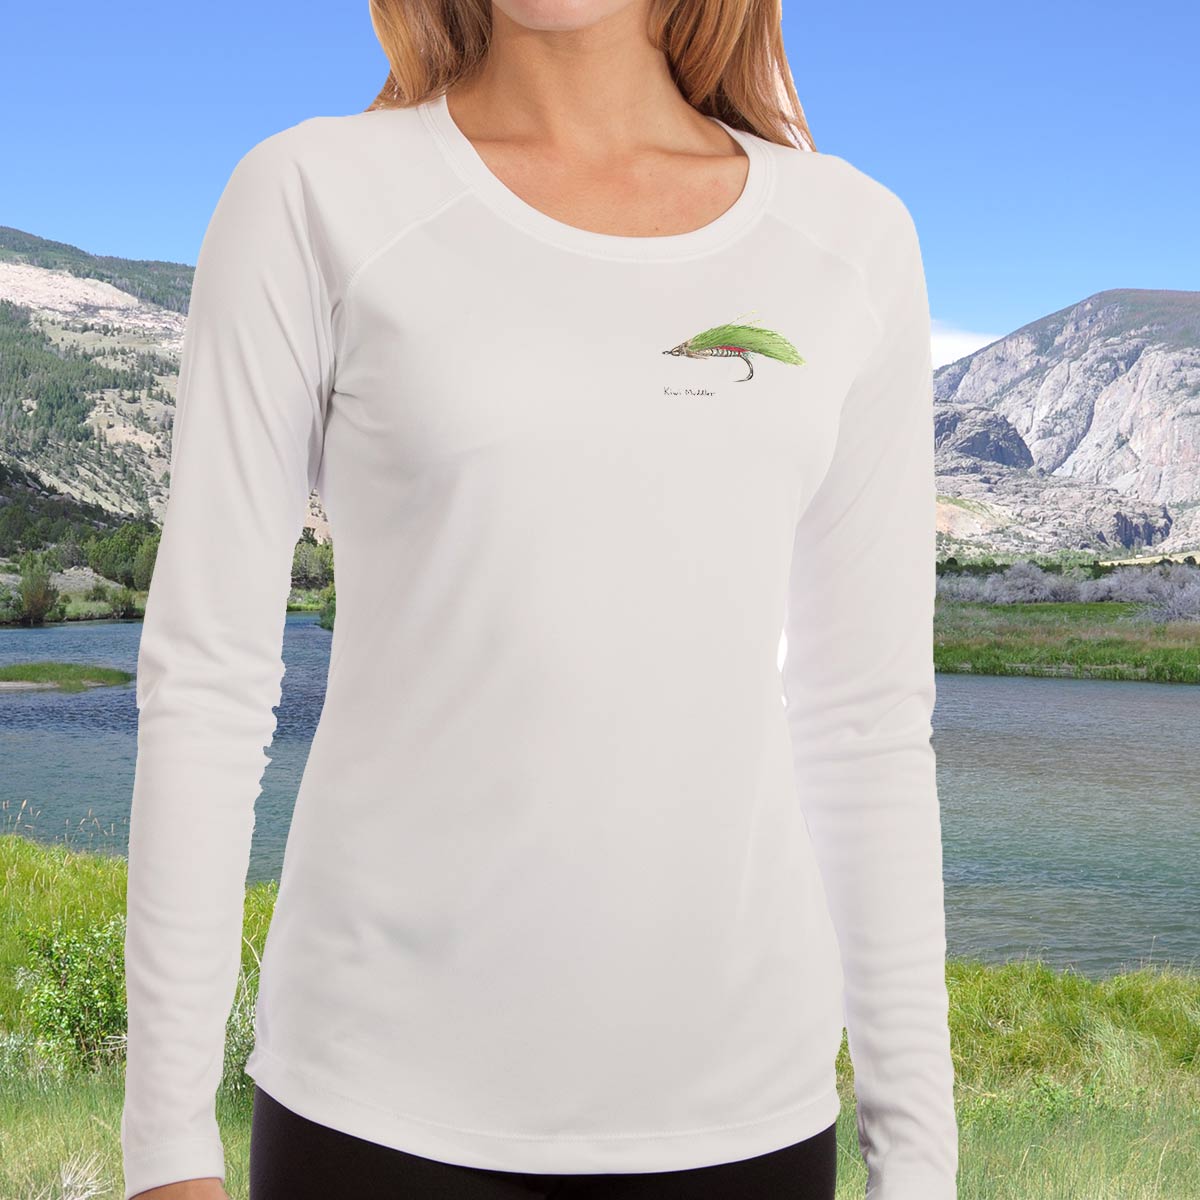 https://www.jeffcurrier.com/wp-content/uploads/2018/08/jeff-currier-ladies-long-sleeve-solar-shirt-kiwi-muddler-white.jpg